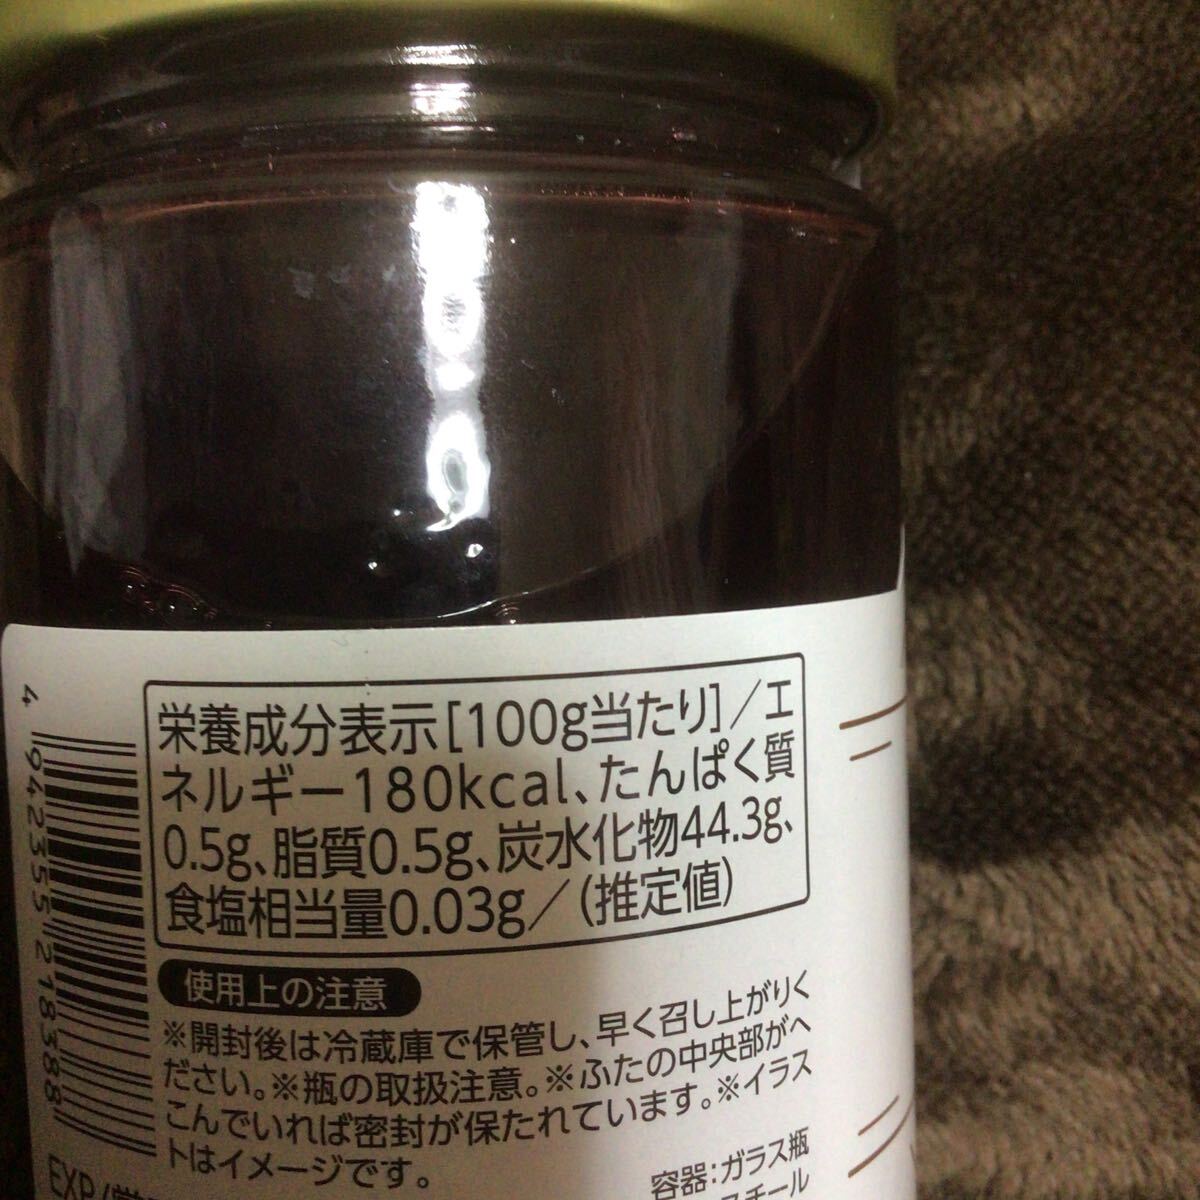  Poland direct import black currant jam 400g